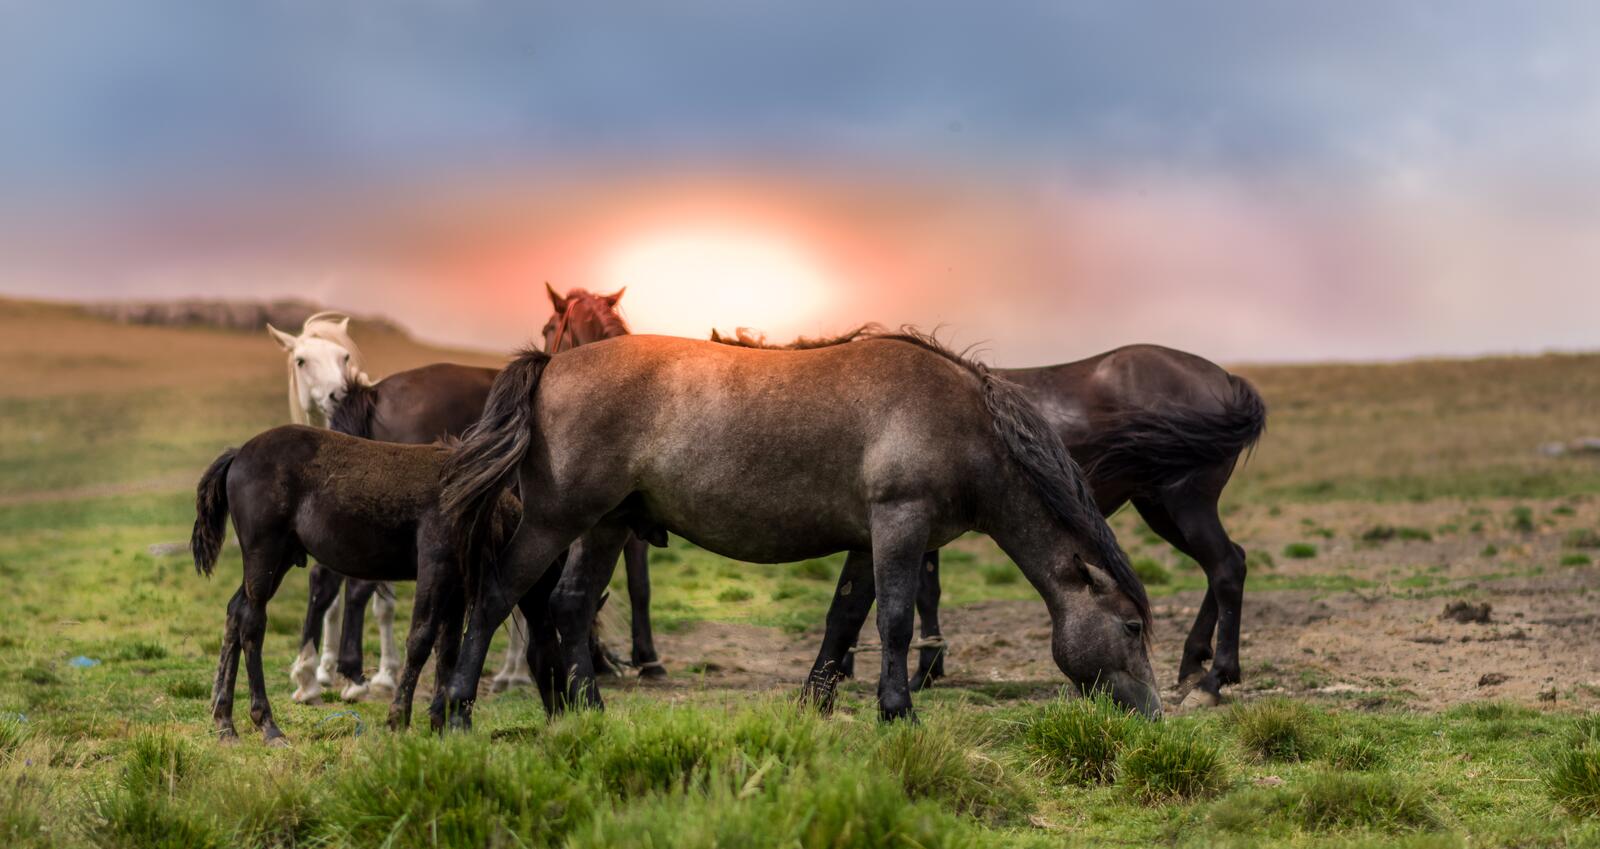 Бесплатное фото Лошади кушают траву на пастбище